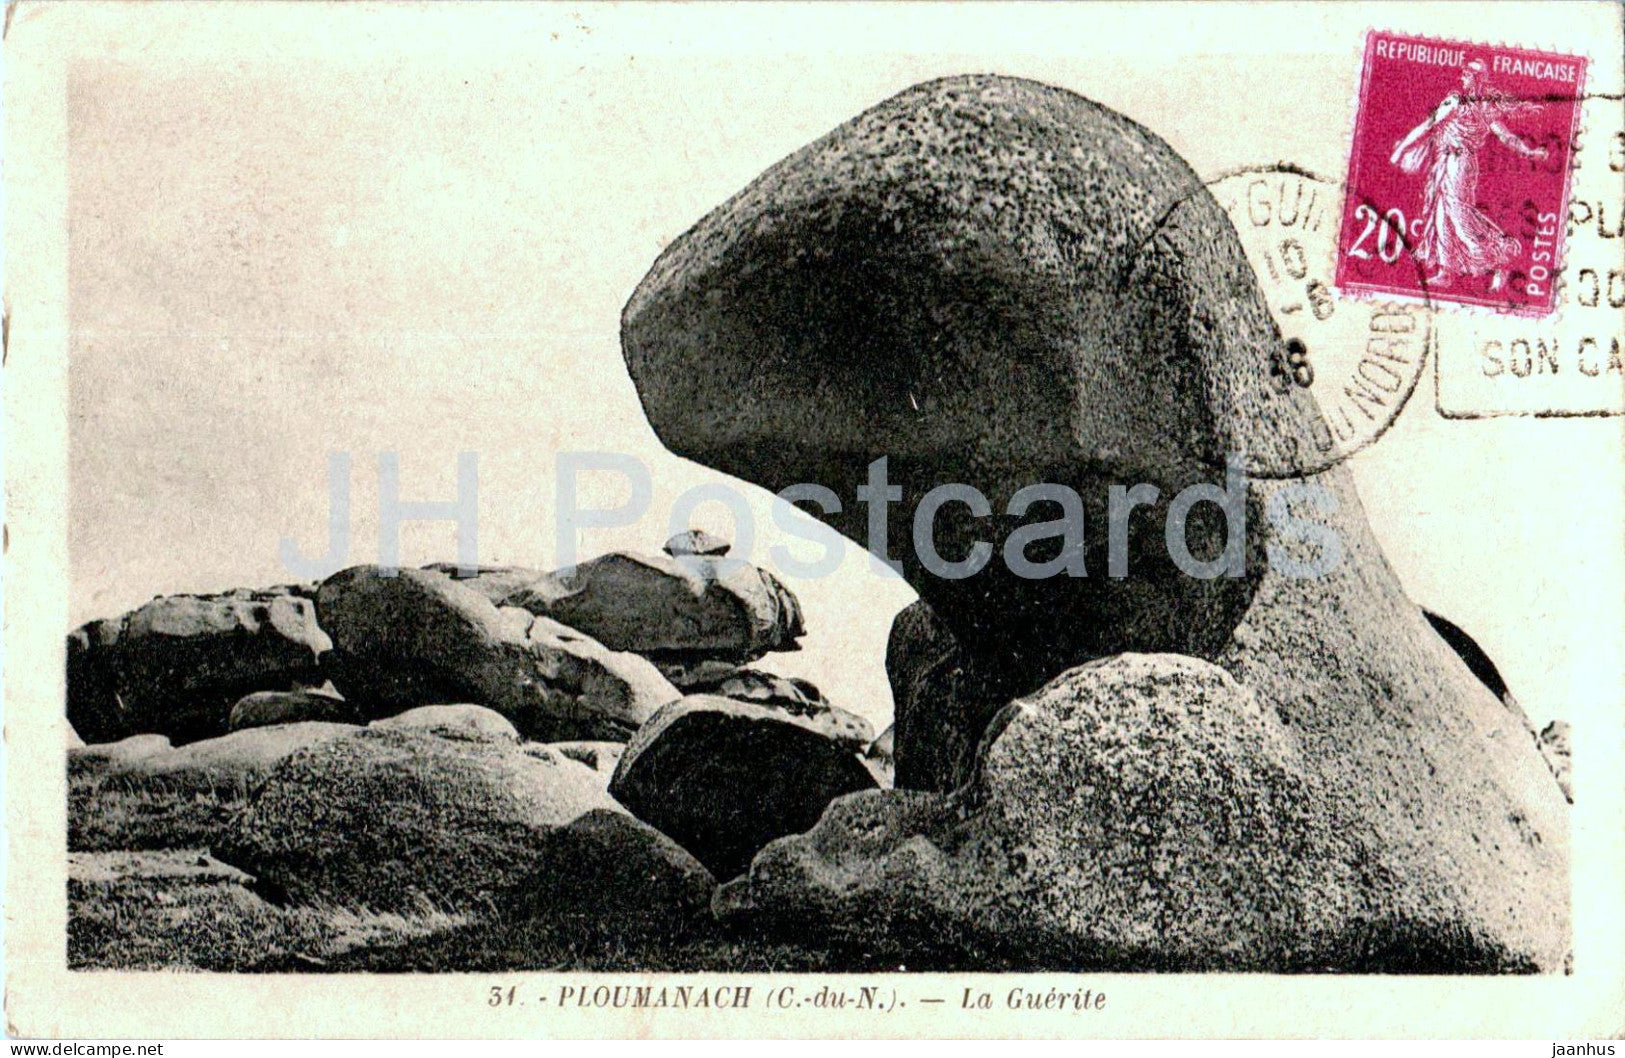 Ploumanach - La Guerite - 31 - old postcard - 1938 - France - used - JH Postcards